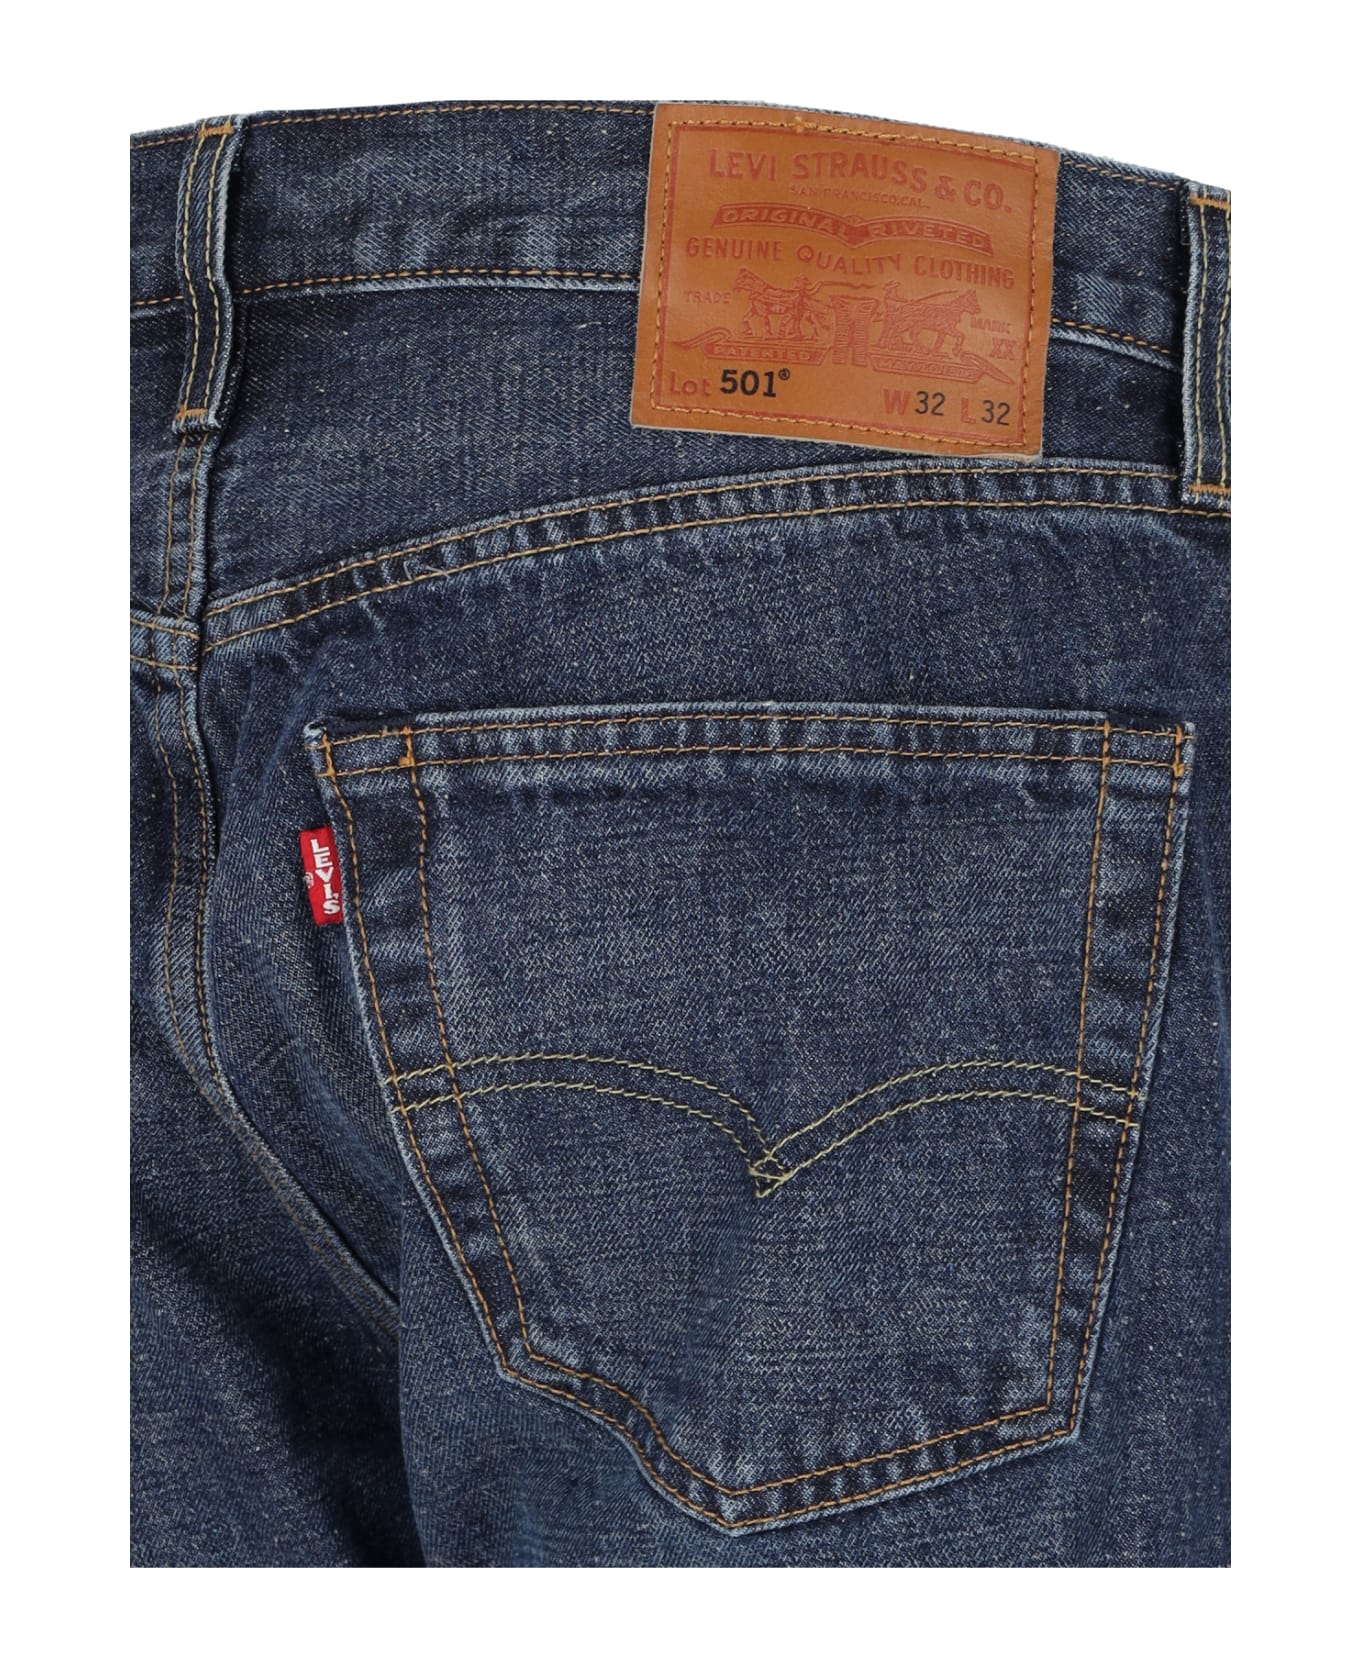 Levi's "501" Straight Jeans - Blue